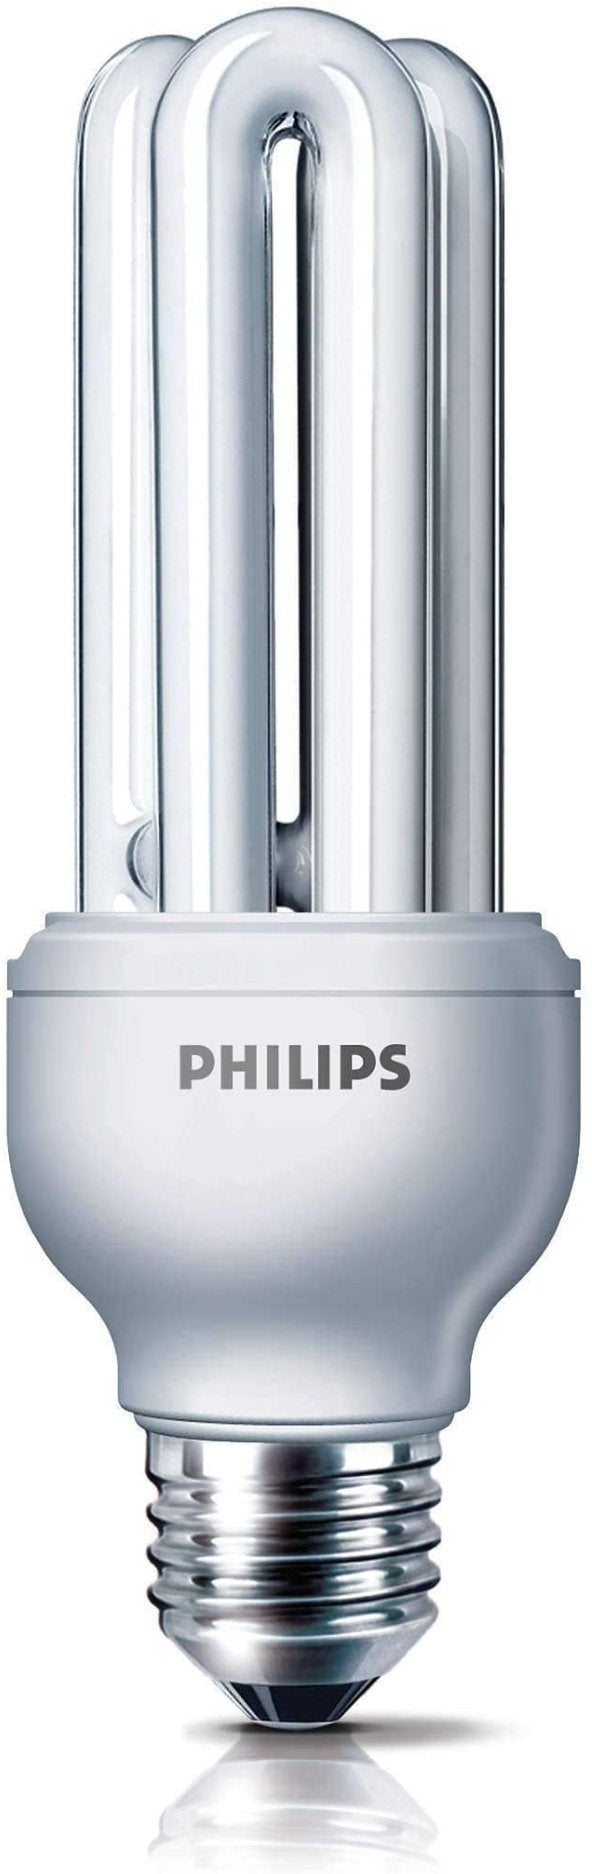 PHILIPS Essential Fluorescent Tubular Bulb x12PCs - DELIGHT OptoElectronics Pte. Ltd